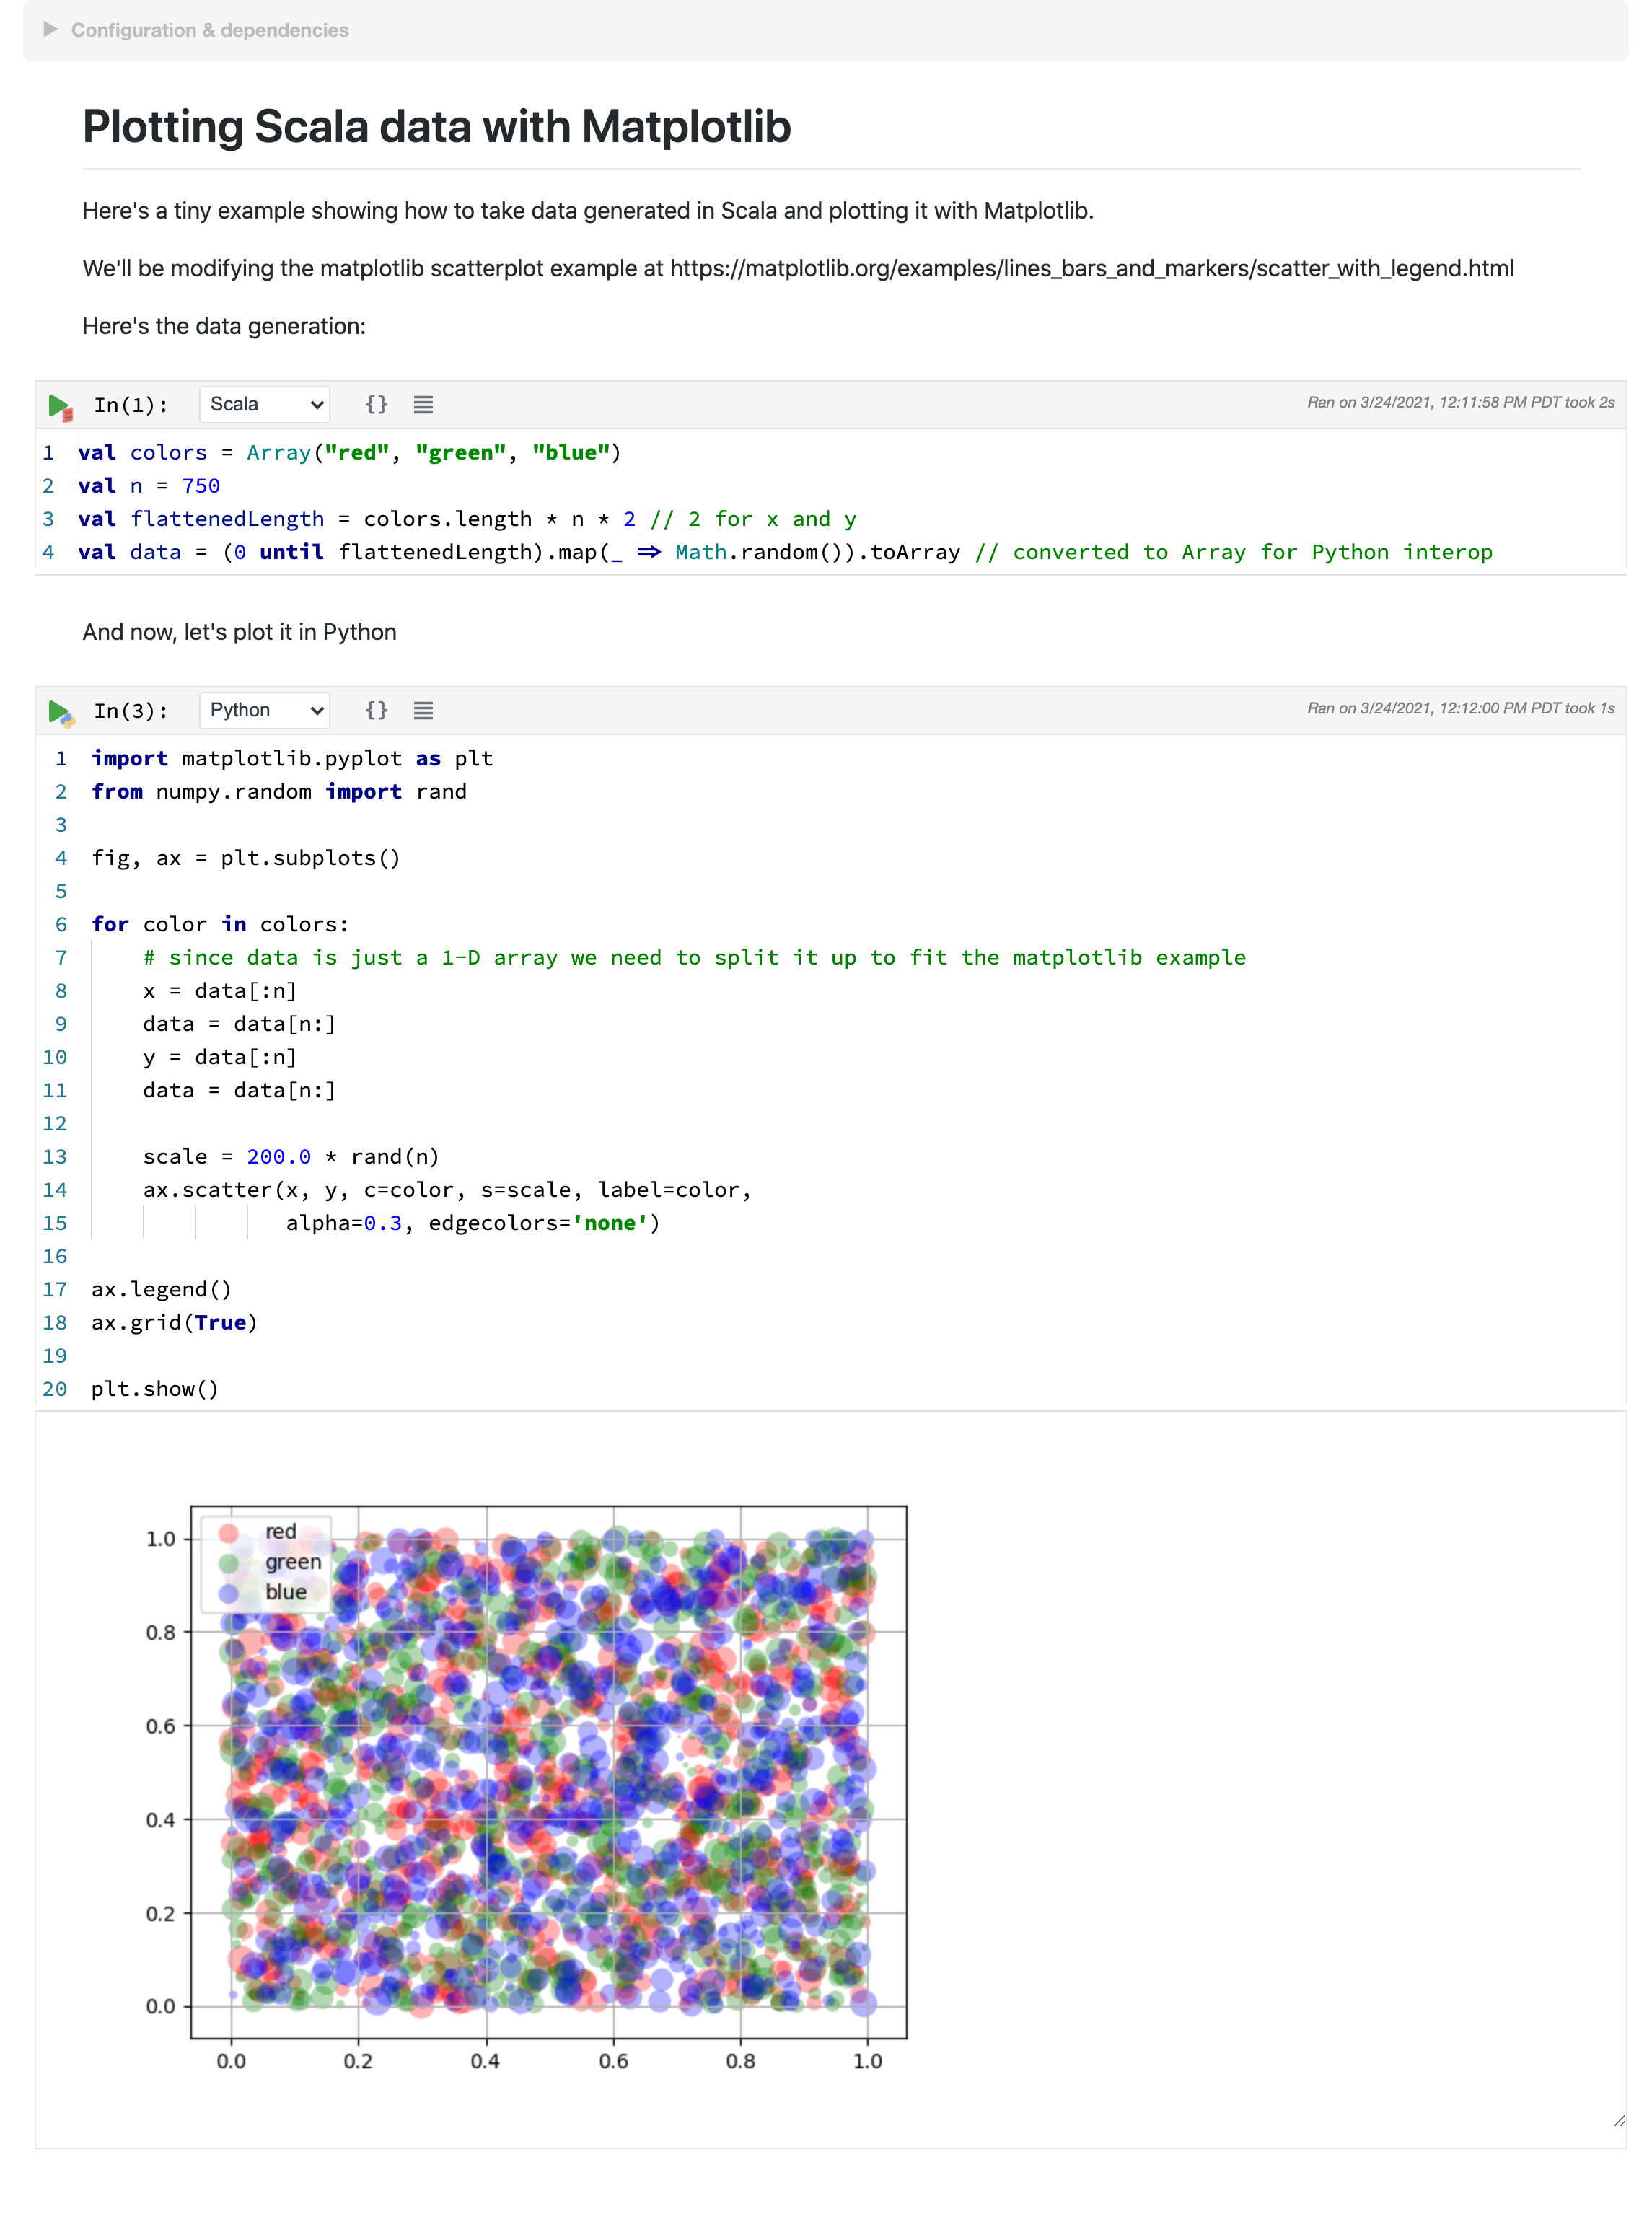 Plotting Scala data with matplotlib through Python